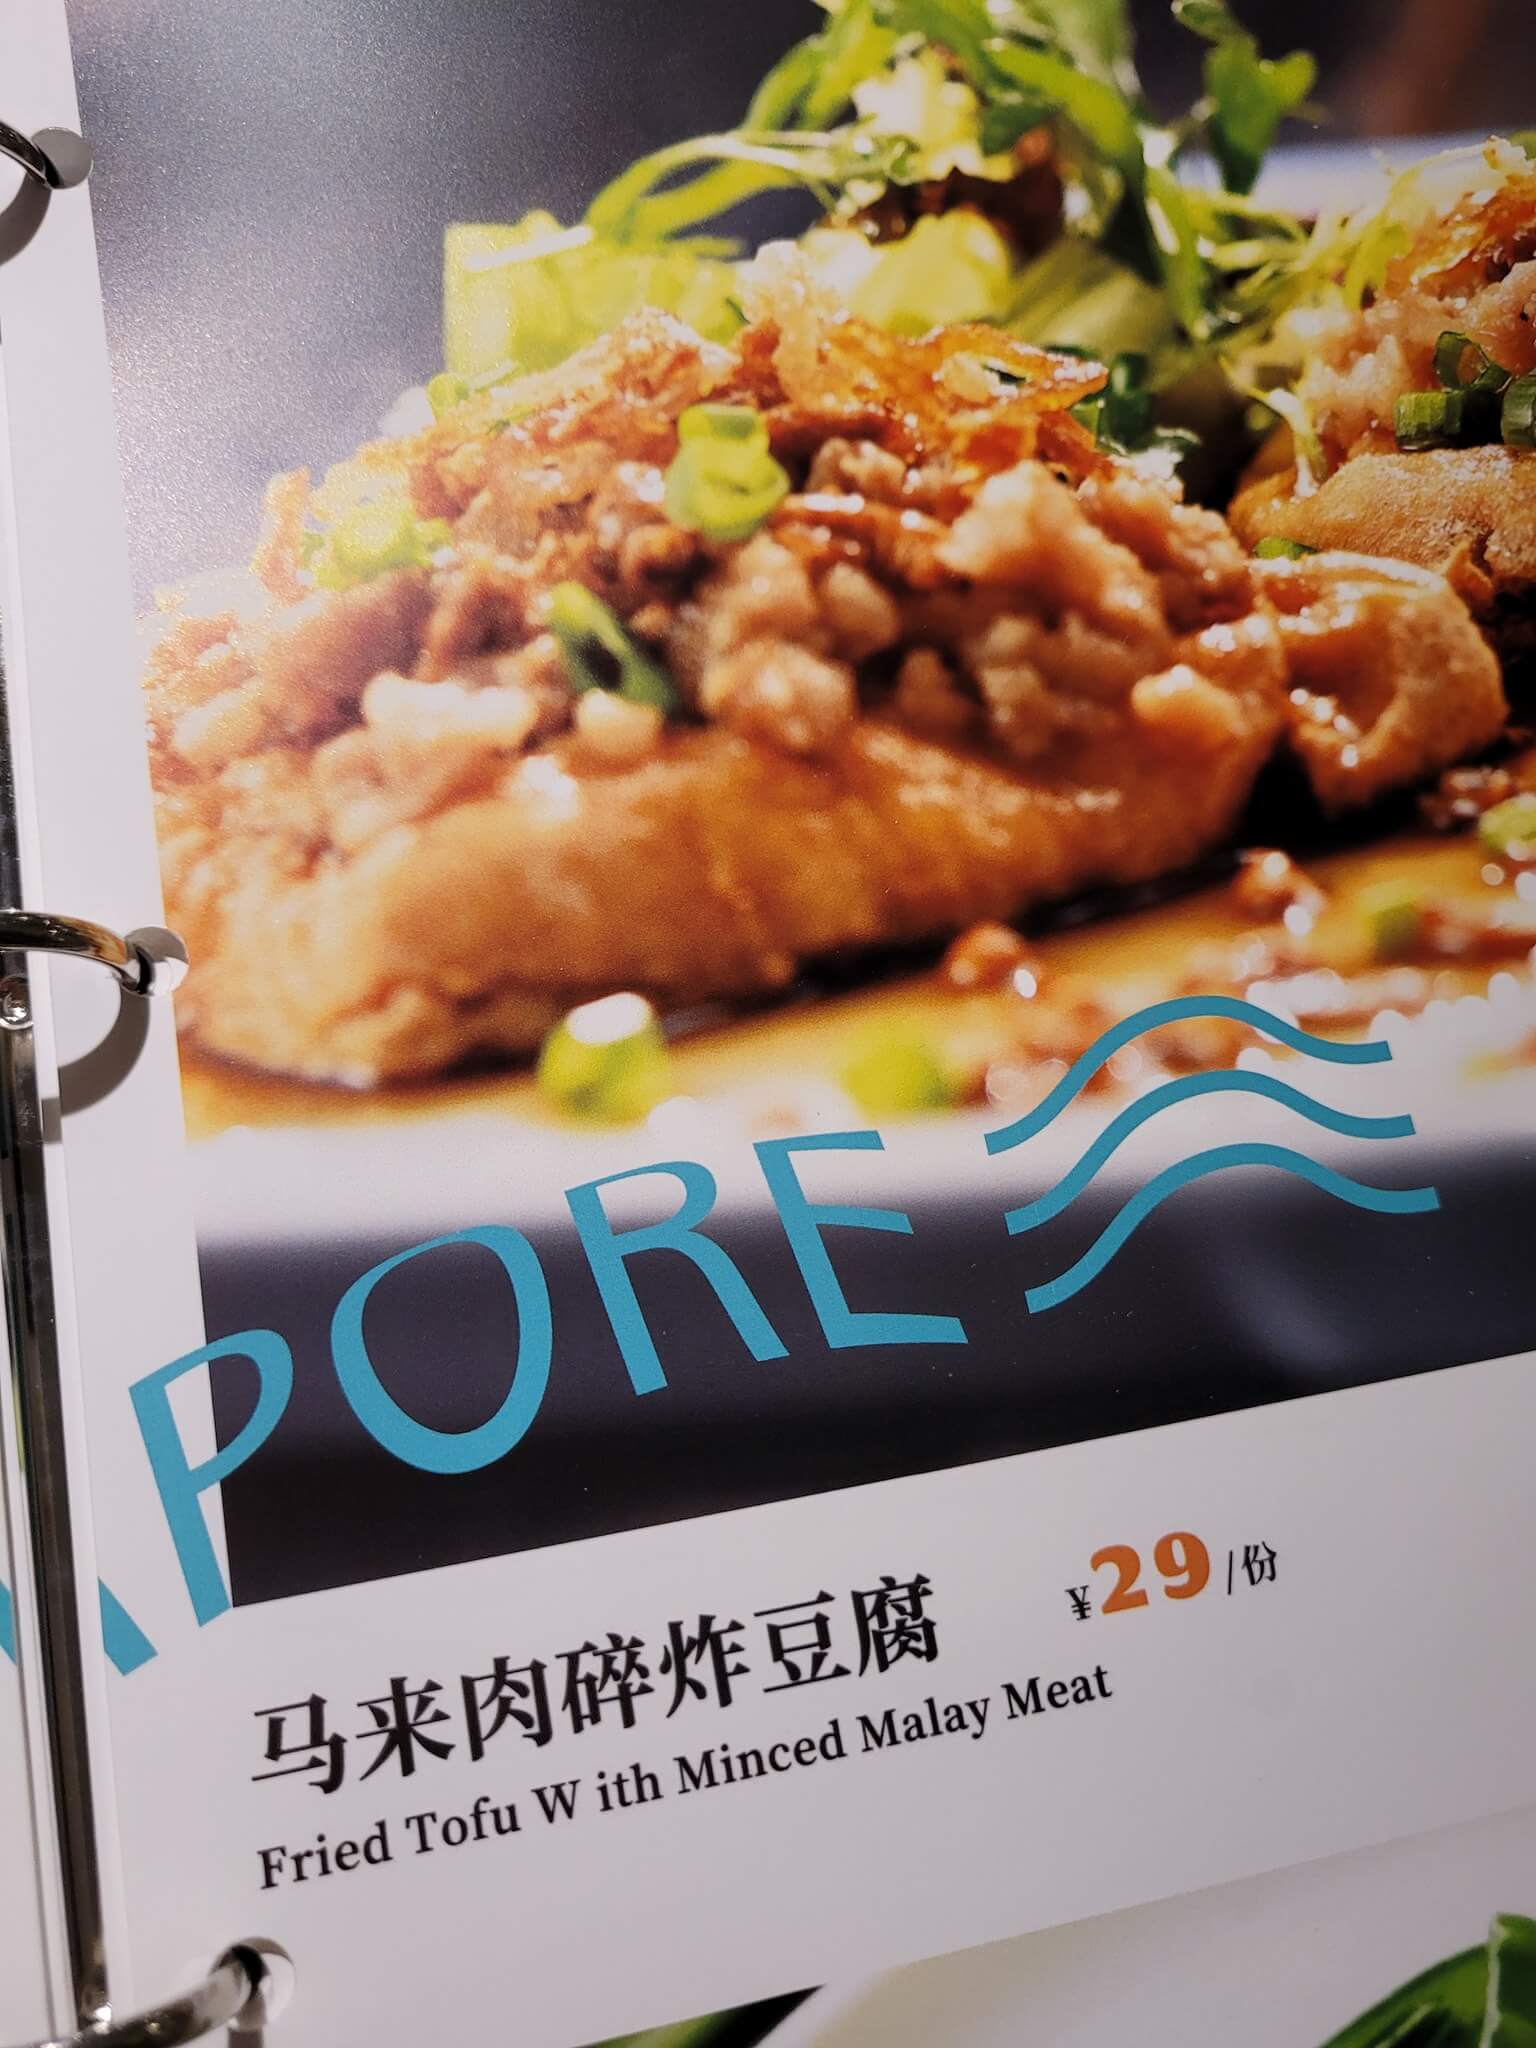 awful-english-translations-in-chinese-restaurant-menu-tofu